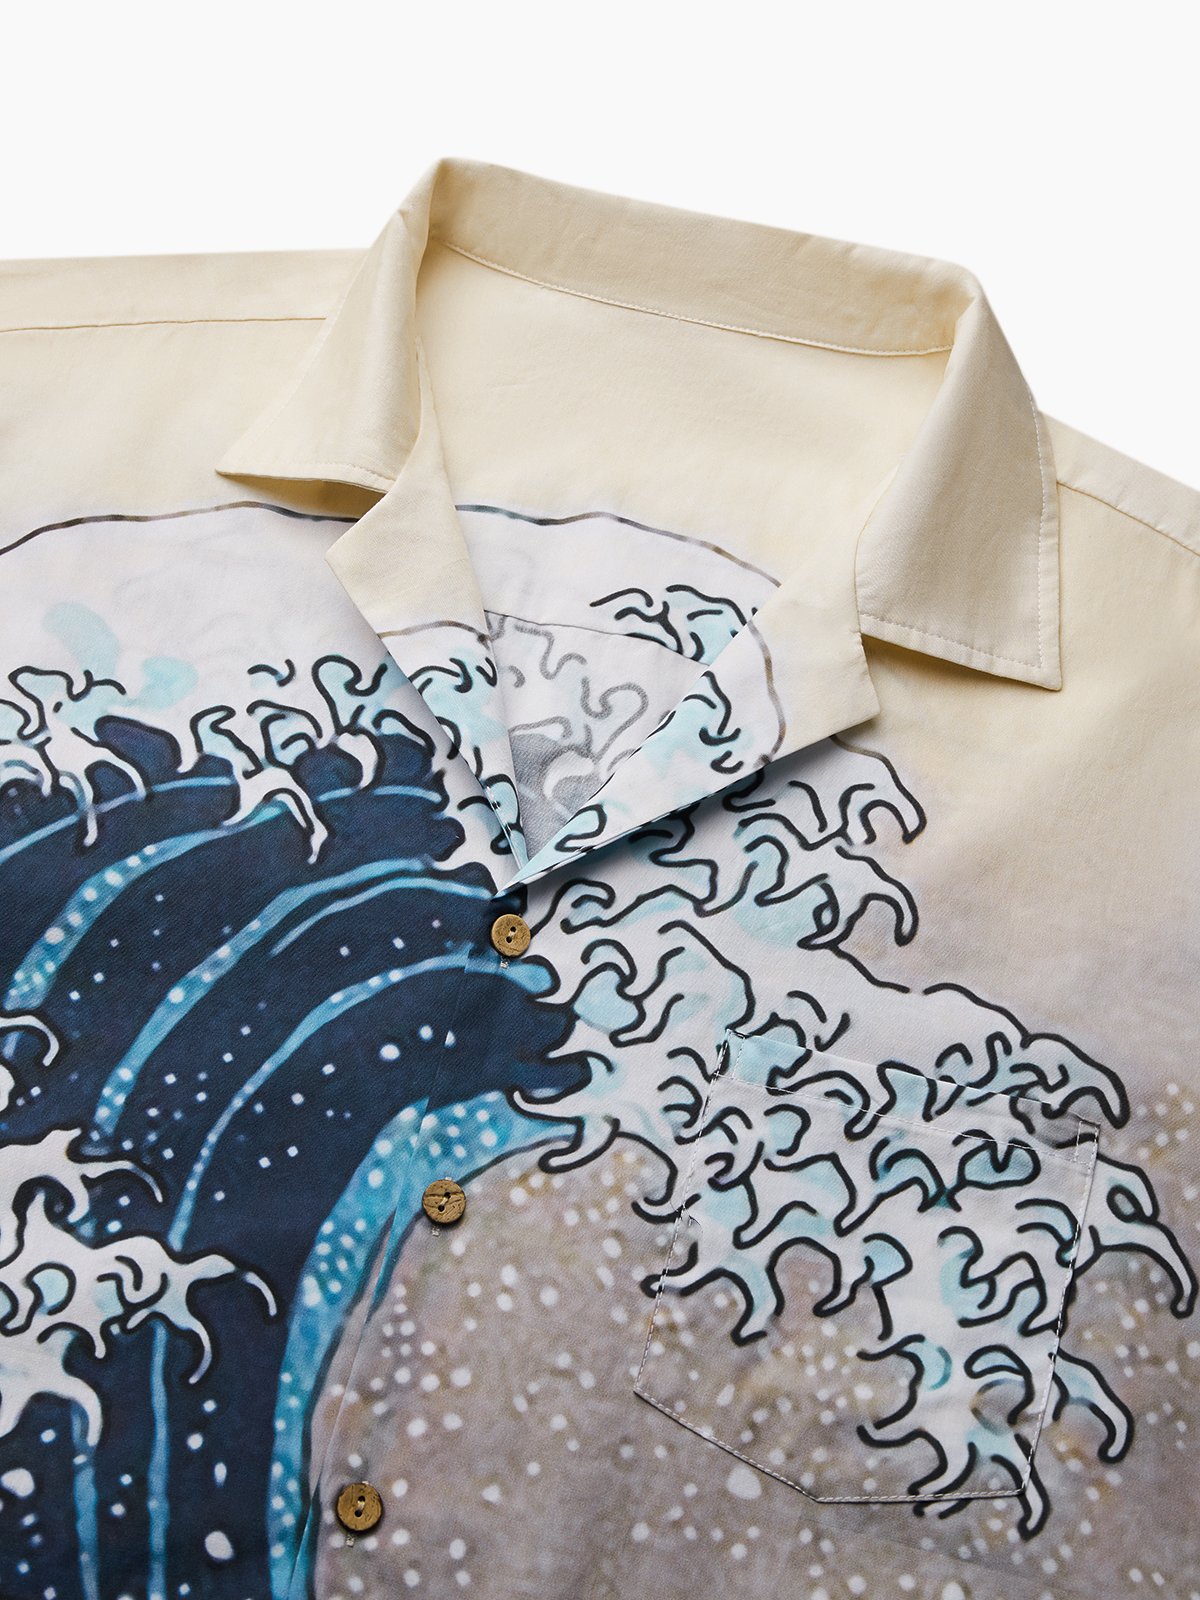 Hardaddy® Japanese Ukiyoe Wave Aloha Shirt